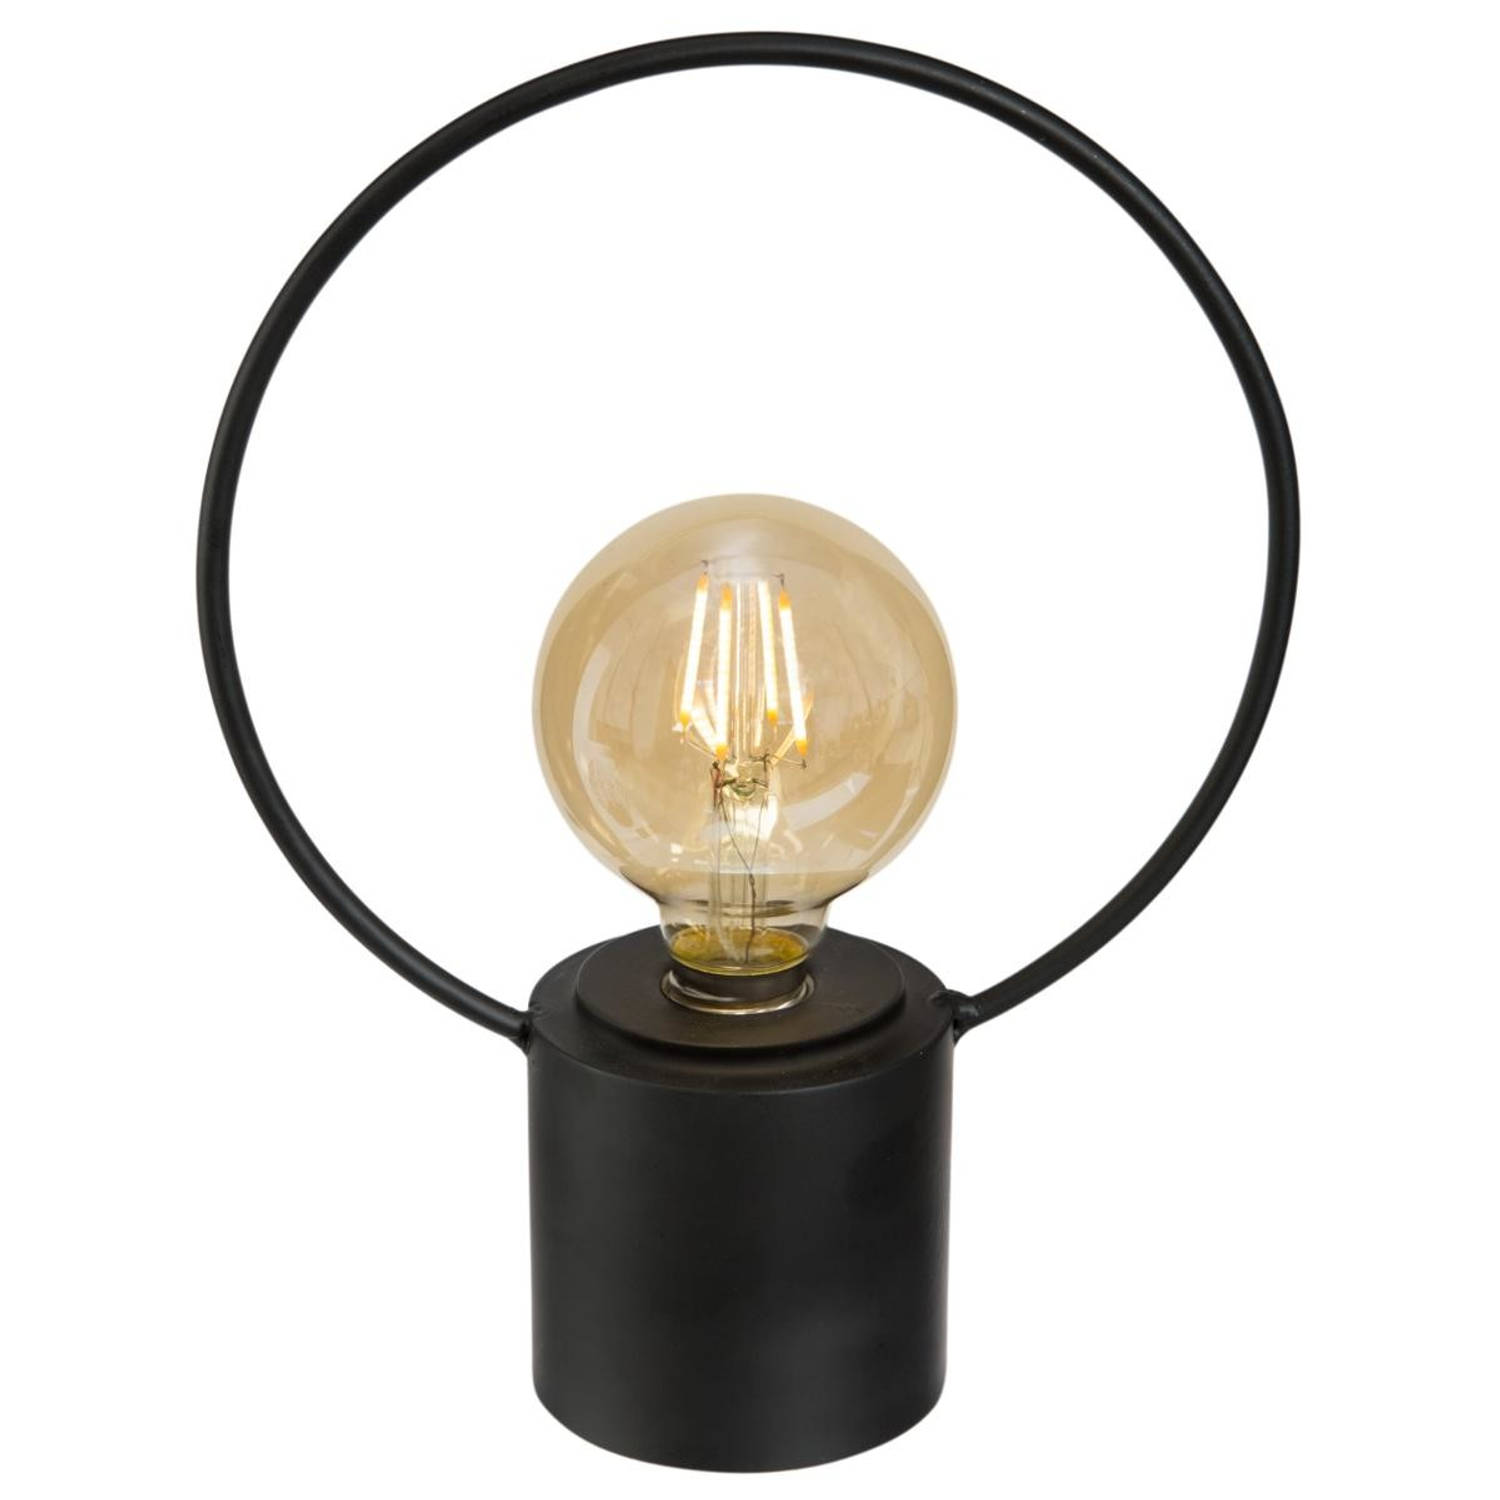 LED-lamp Chic - Zwart - Werkt op batterijen (incl. lamp)